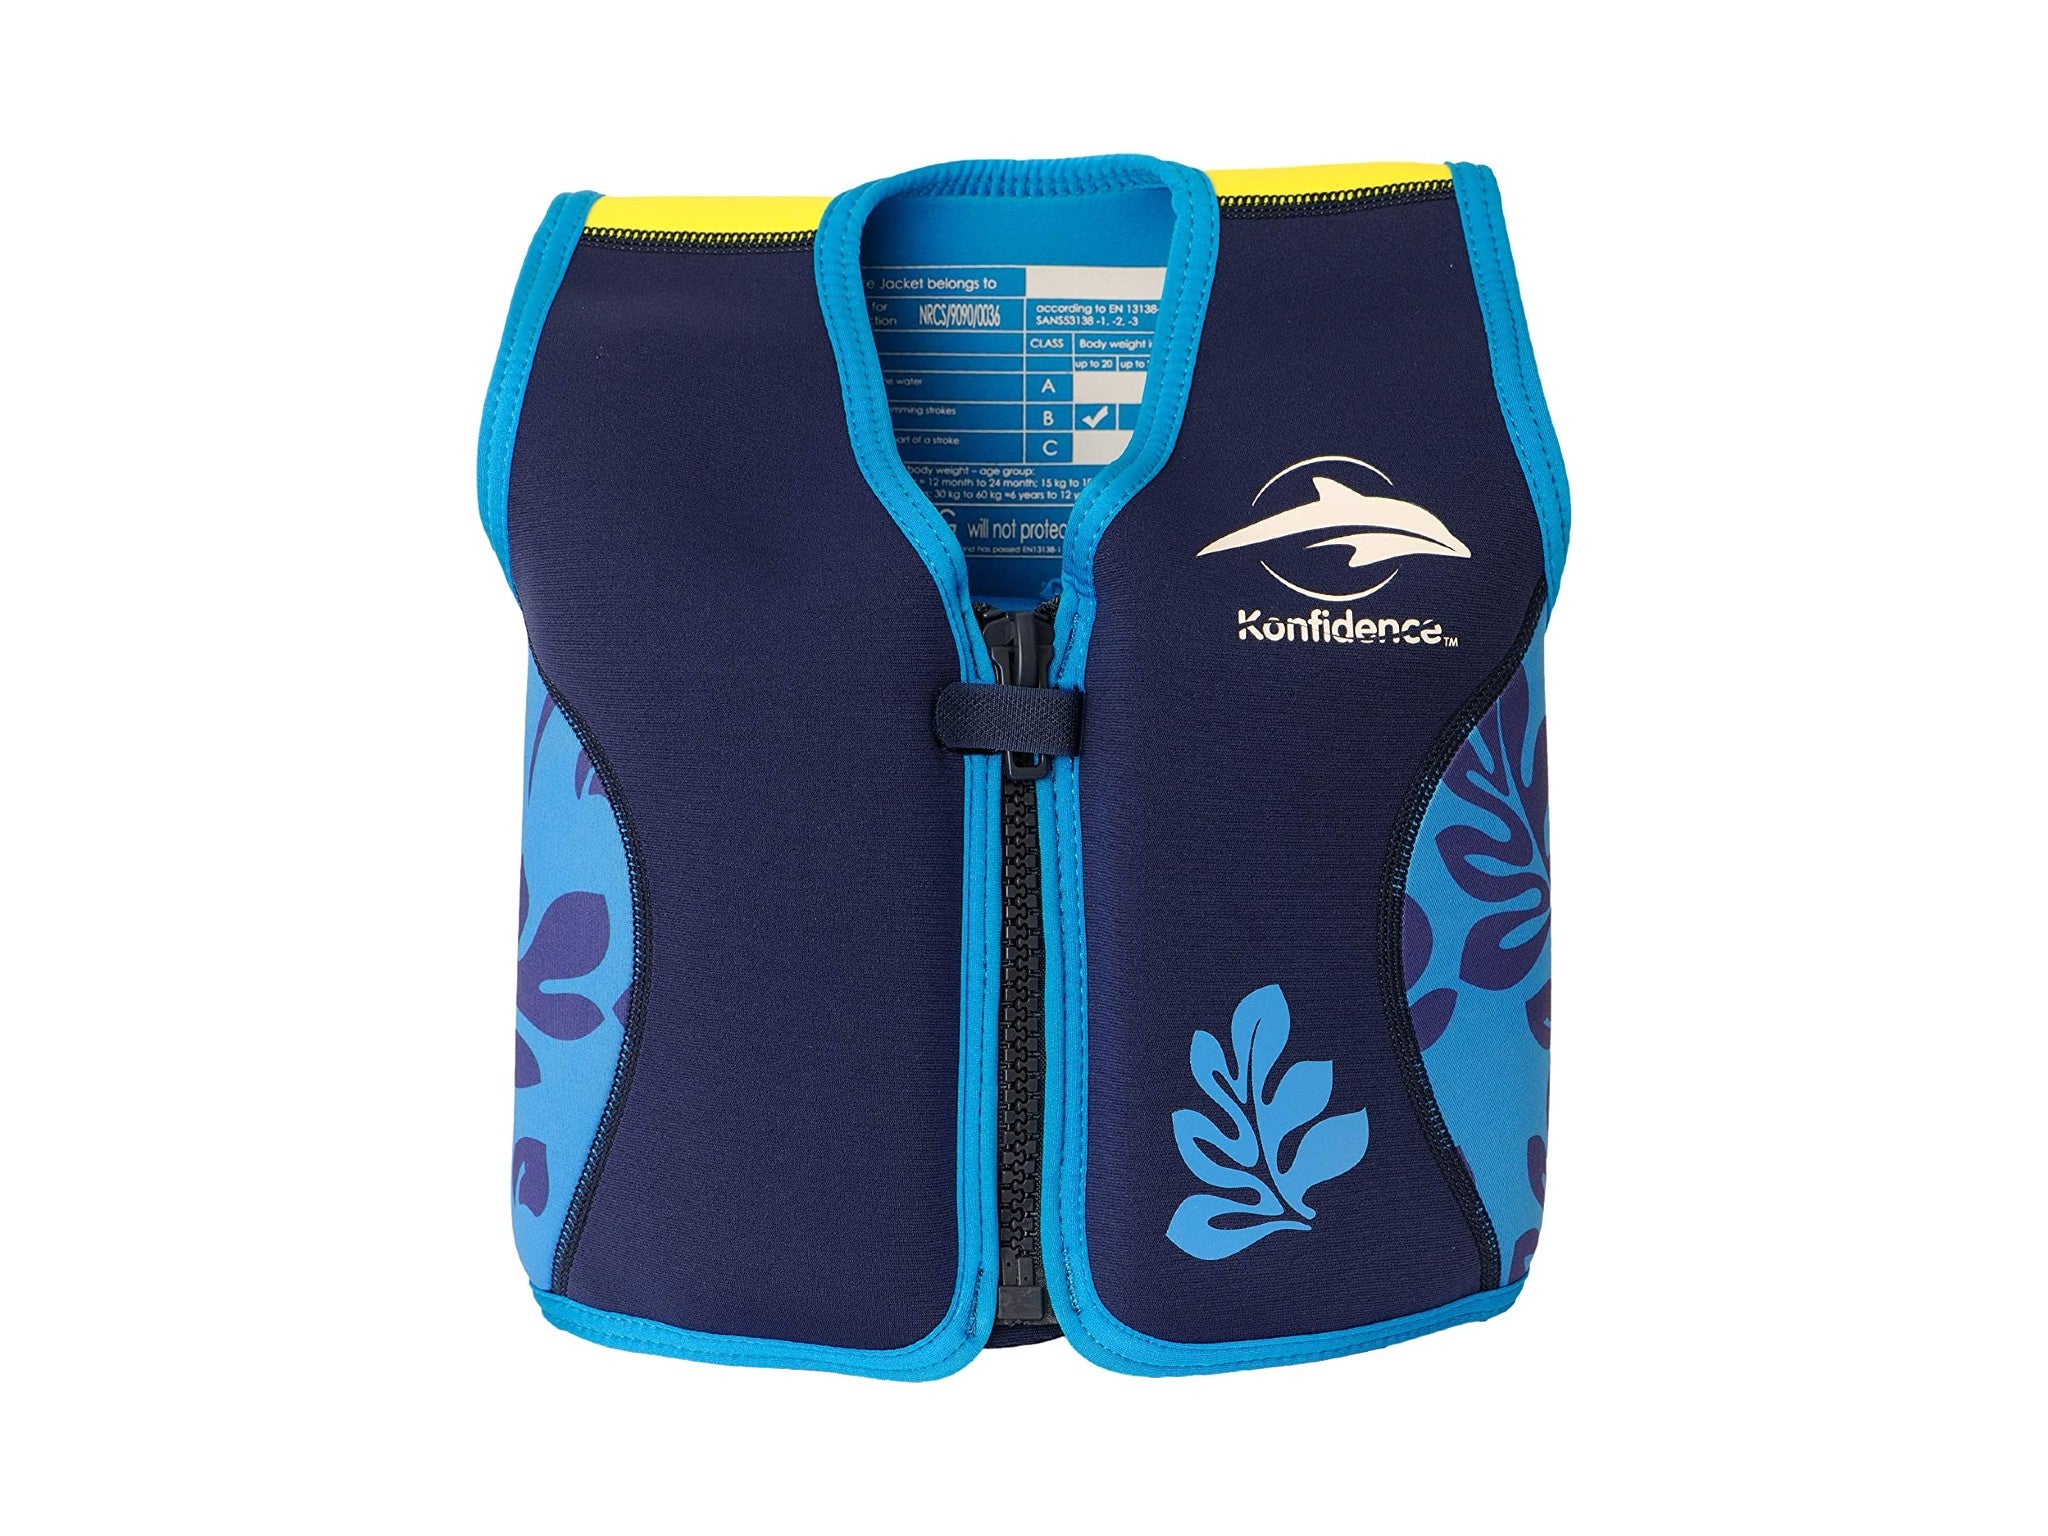 alpscale Children Aid Safety Float Inflatable Swim Vest Learn-to Swim Life Jacket Buoyancy Aid Vest 